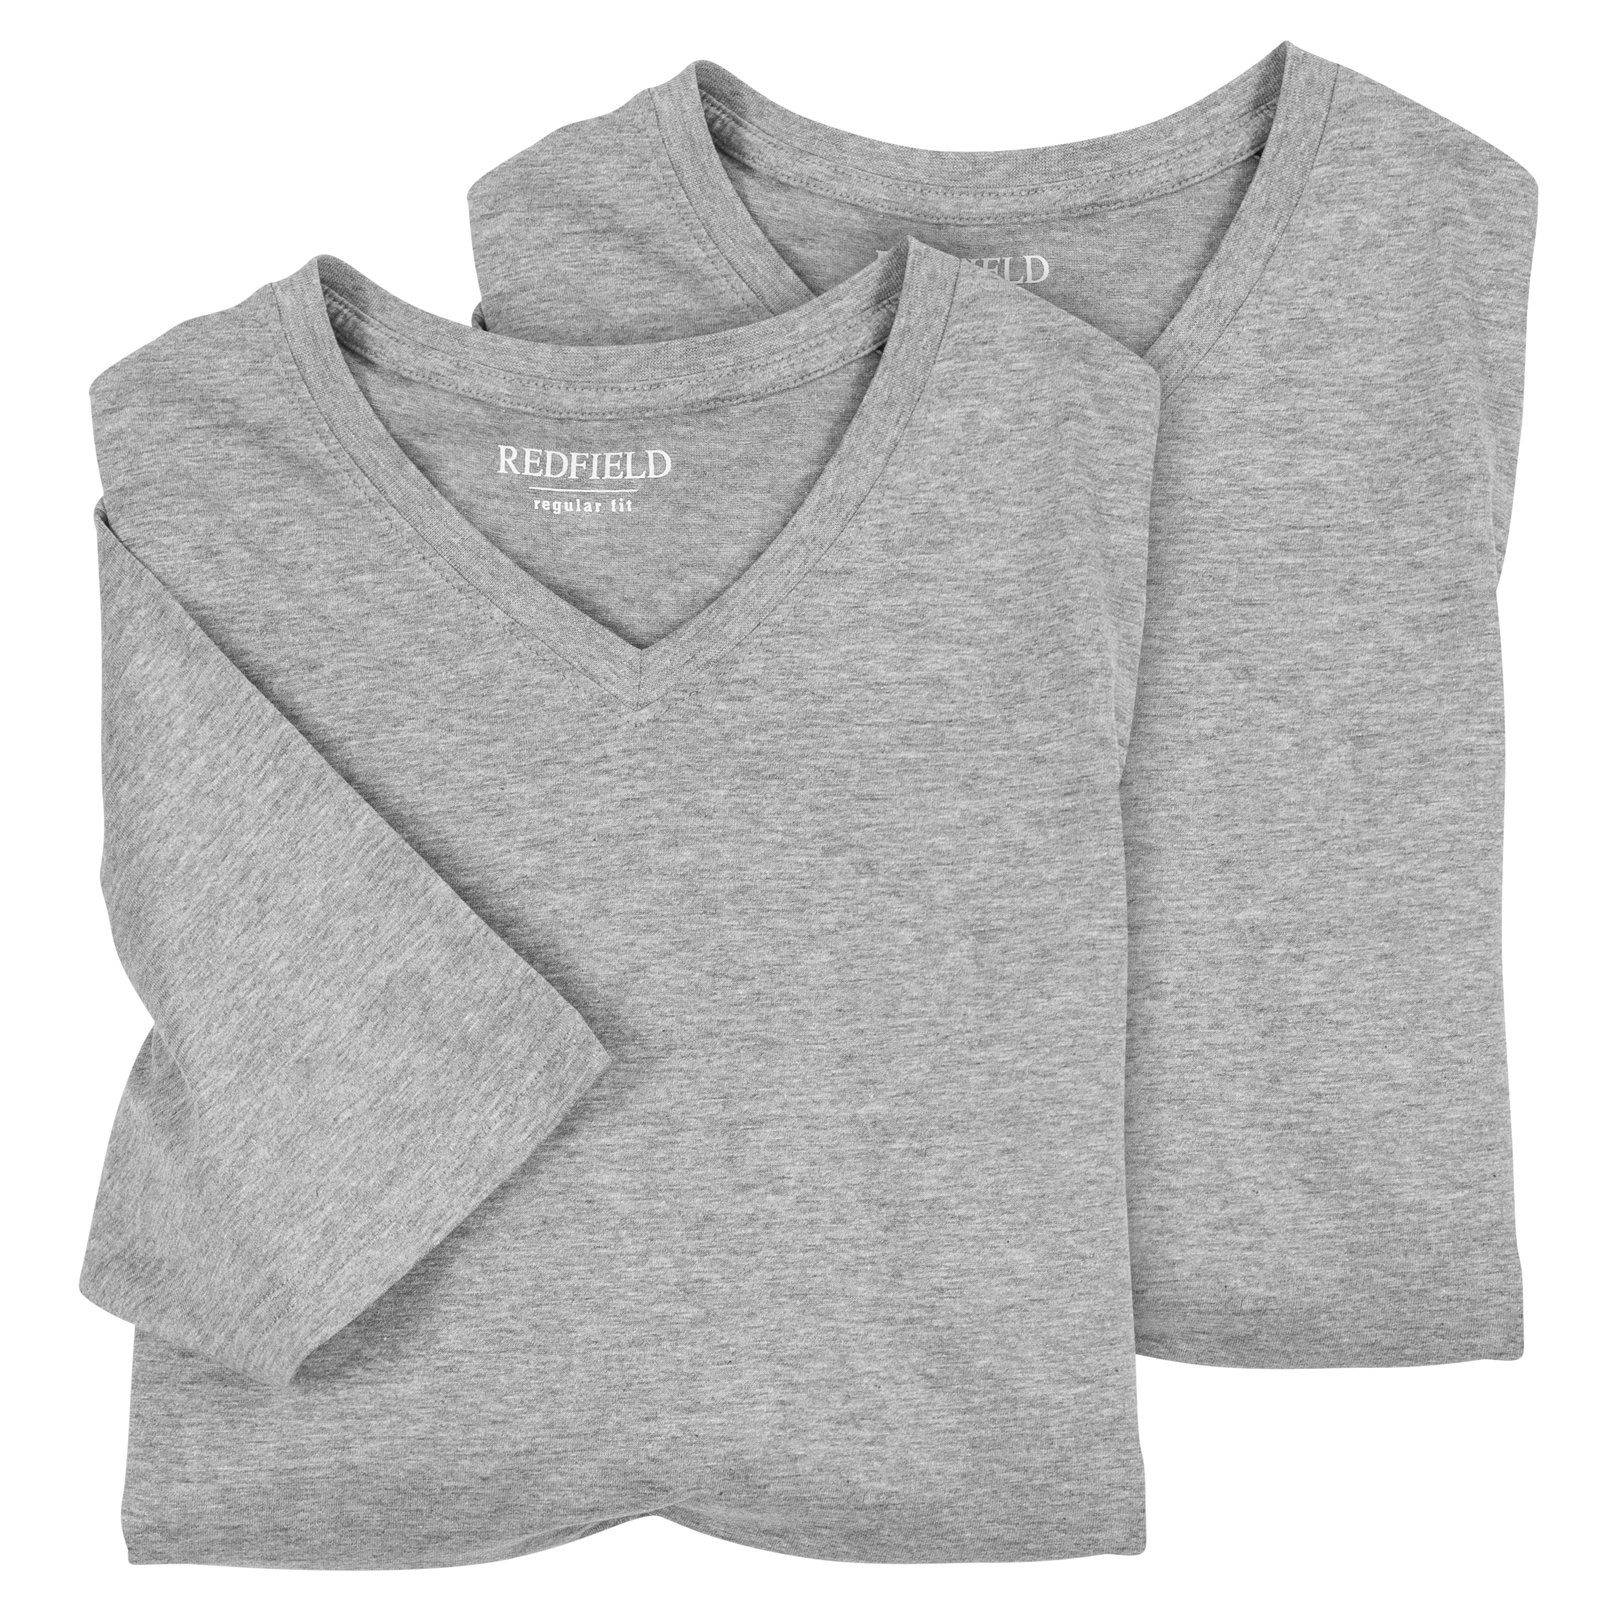 Redfield redfield Doppelpack grau V-Ausschnitt Übergrößen V-Shirt melange T-Shirts